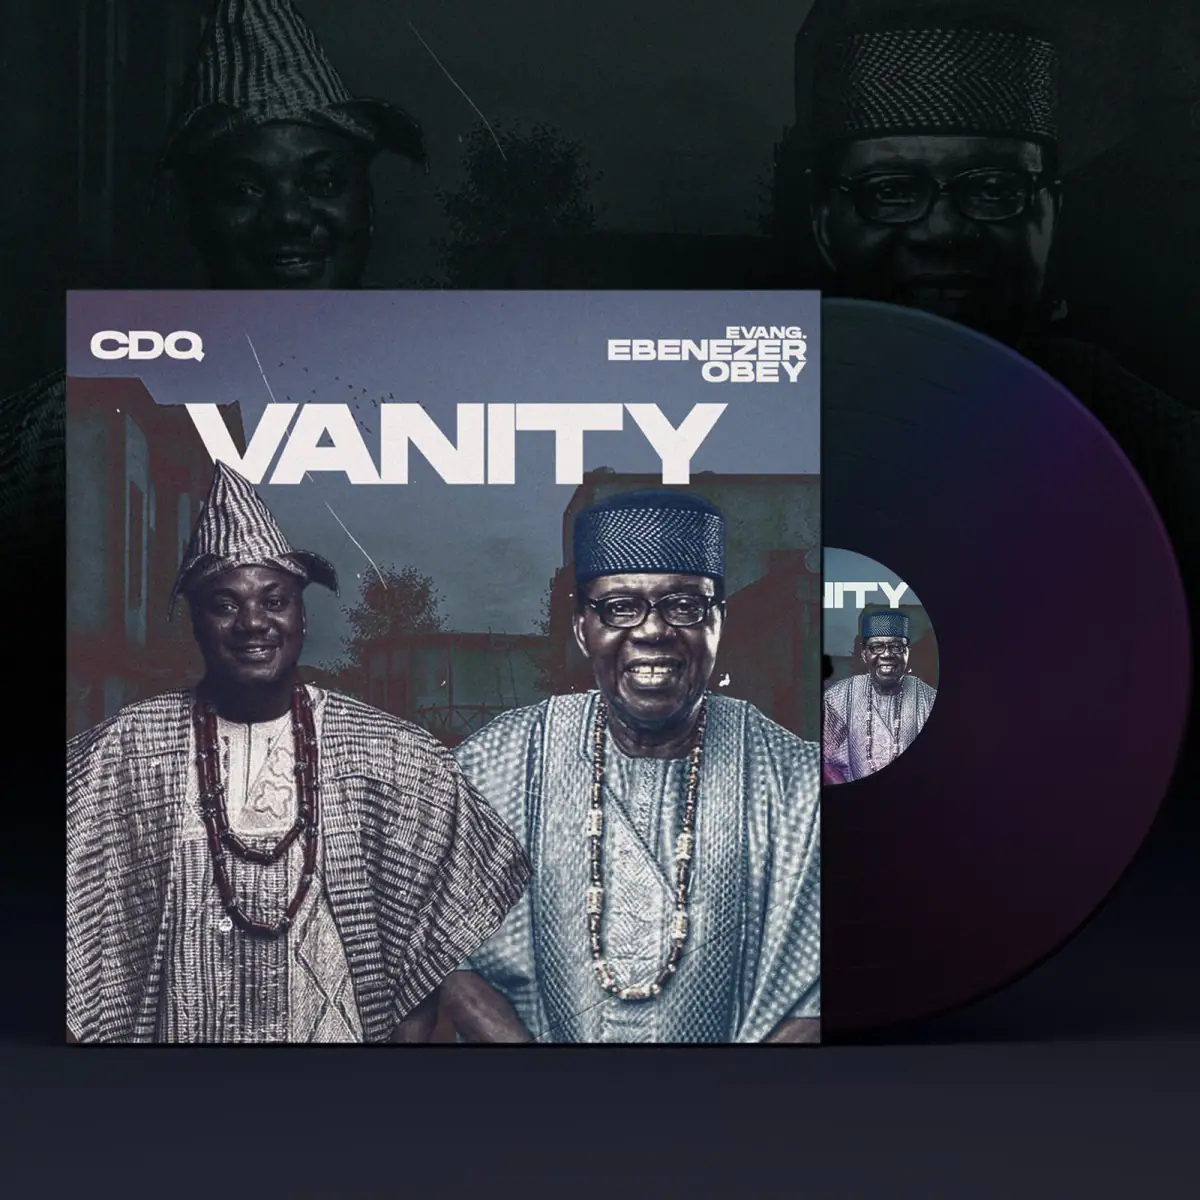 CDQ – Vanity Ft. Evang. Ebenezer Obey mp3 download